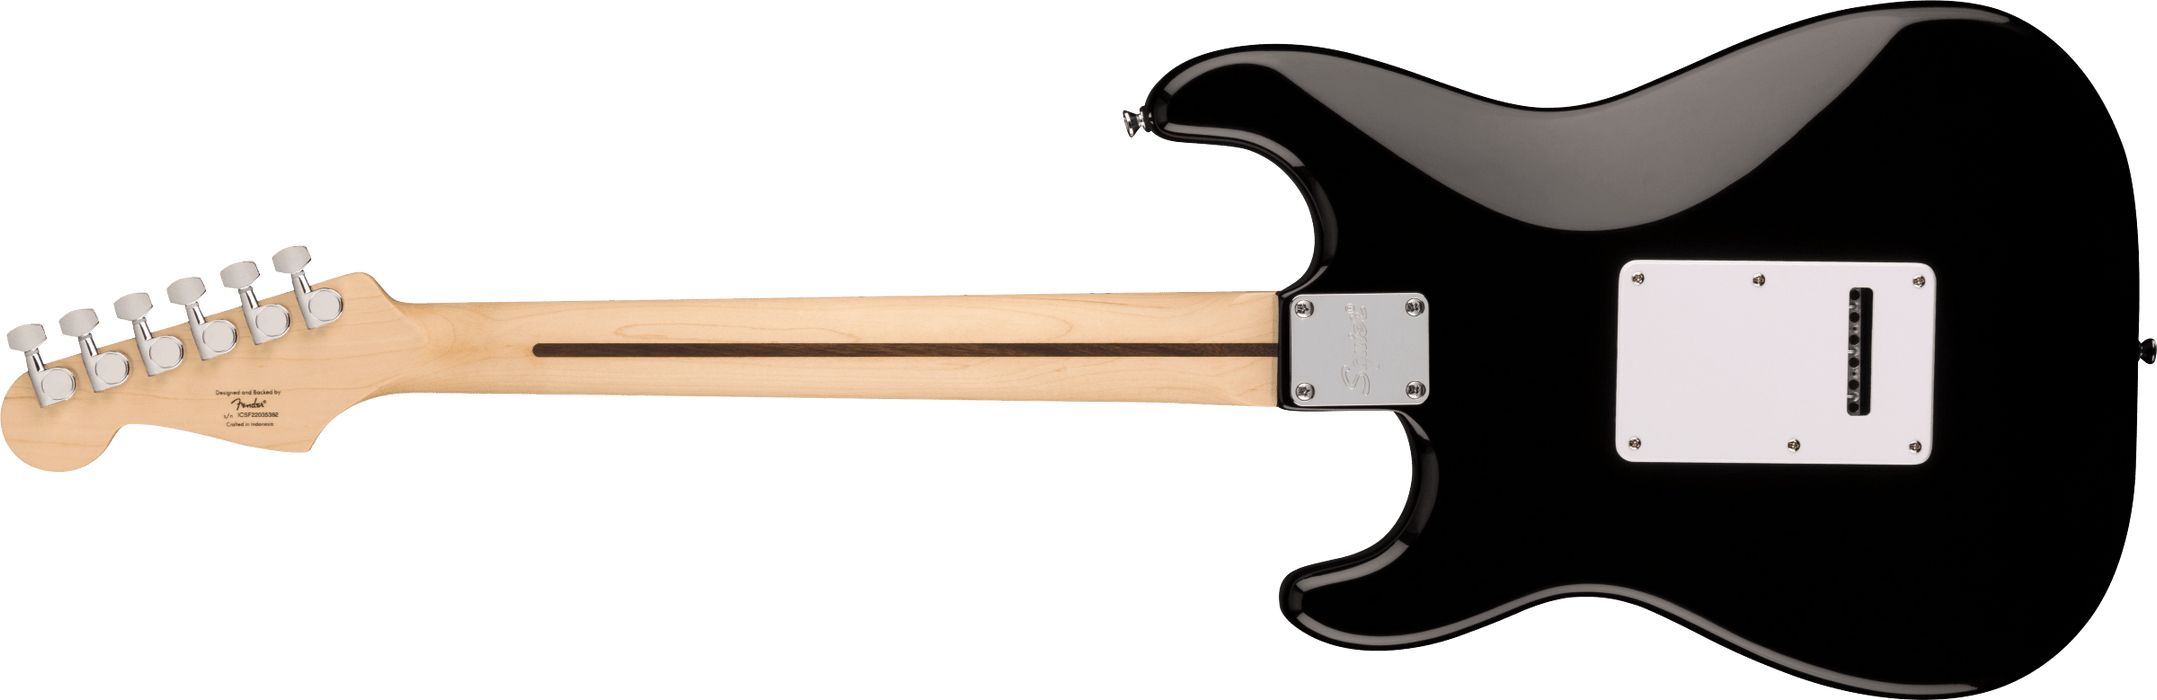 Squier Sonic™ Stratocaster®, Maple Fingerboard, White Pickguard - Black